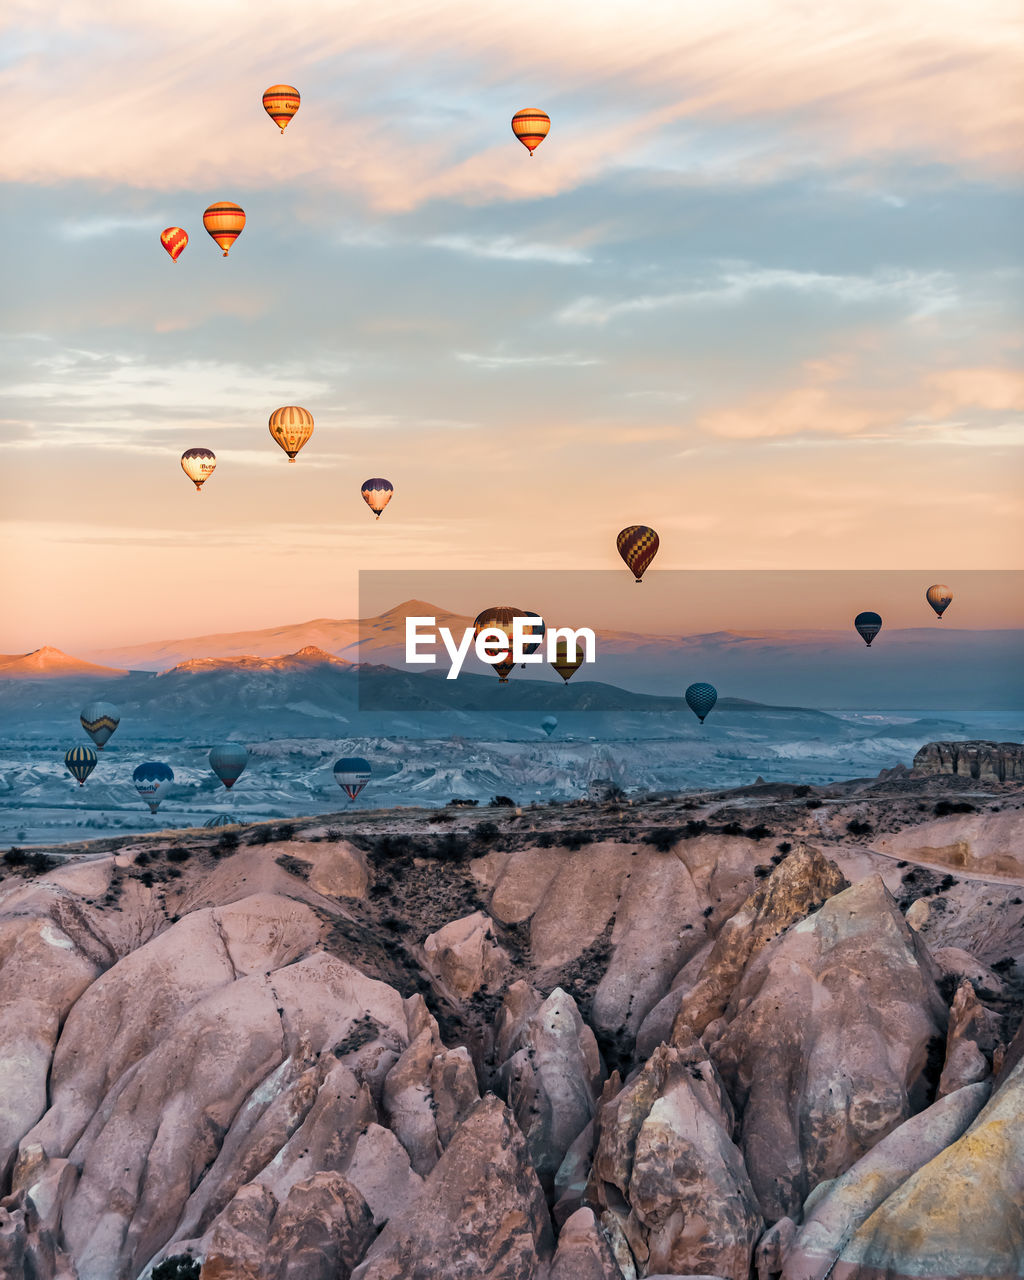 Hot air balloons flying over rocks against sky during sunset